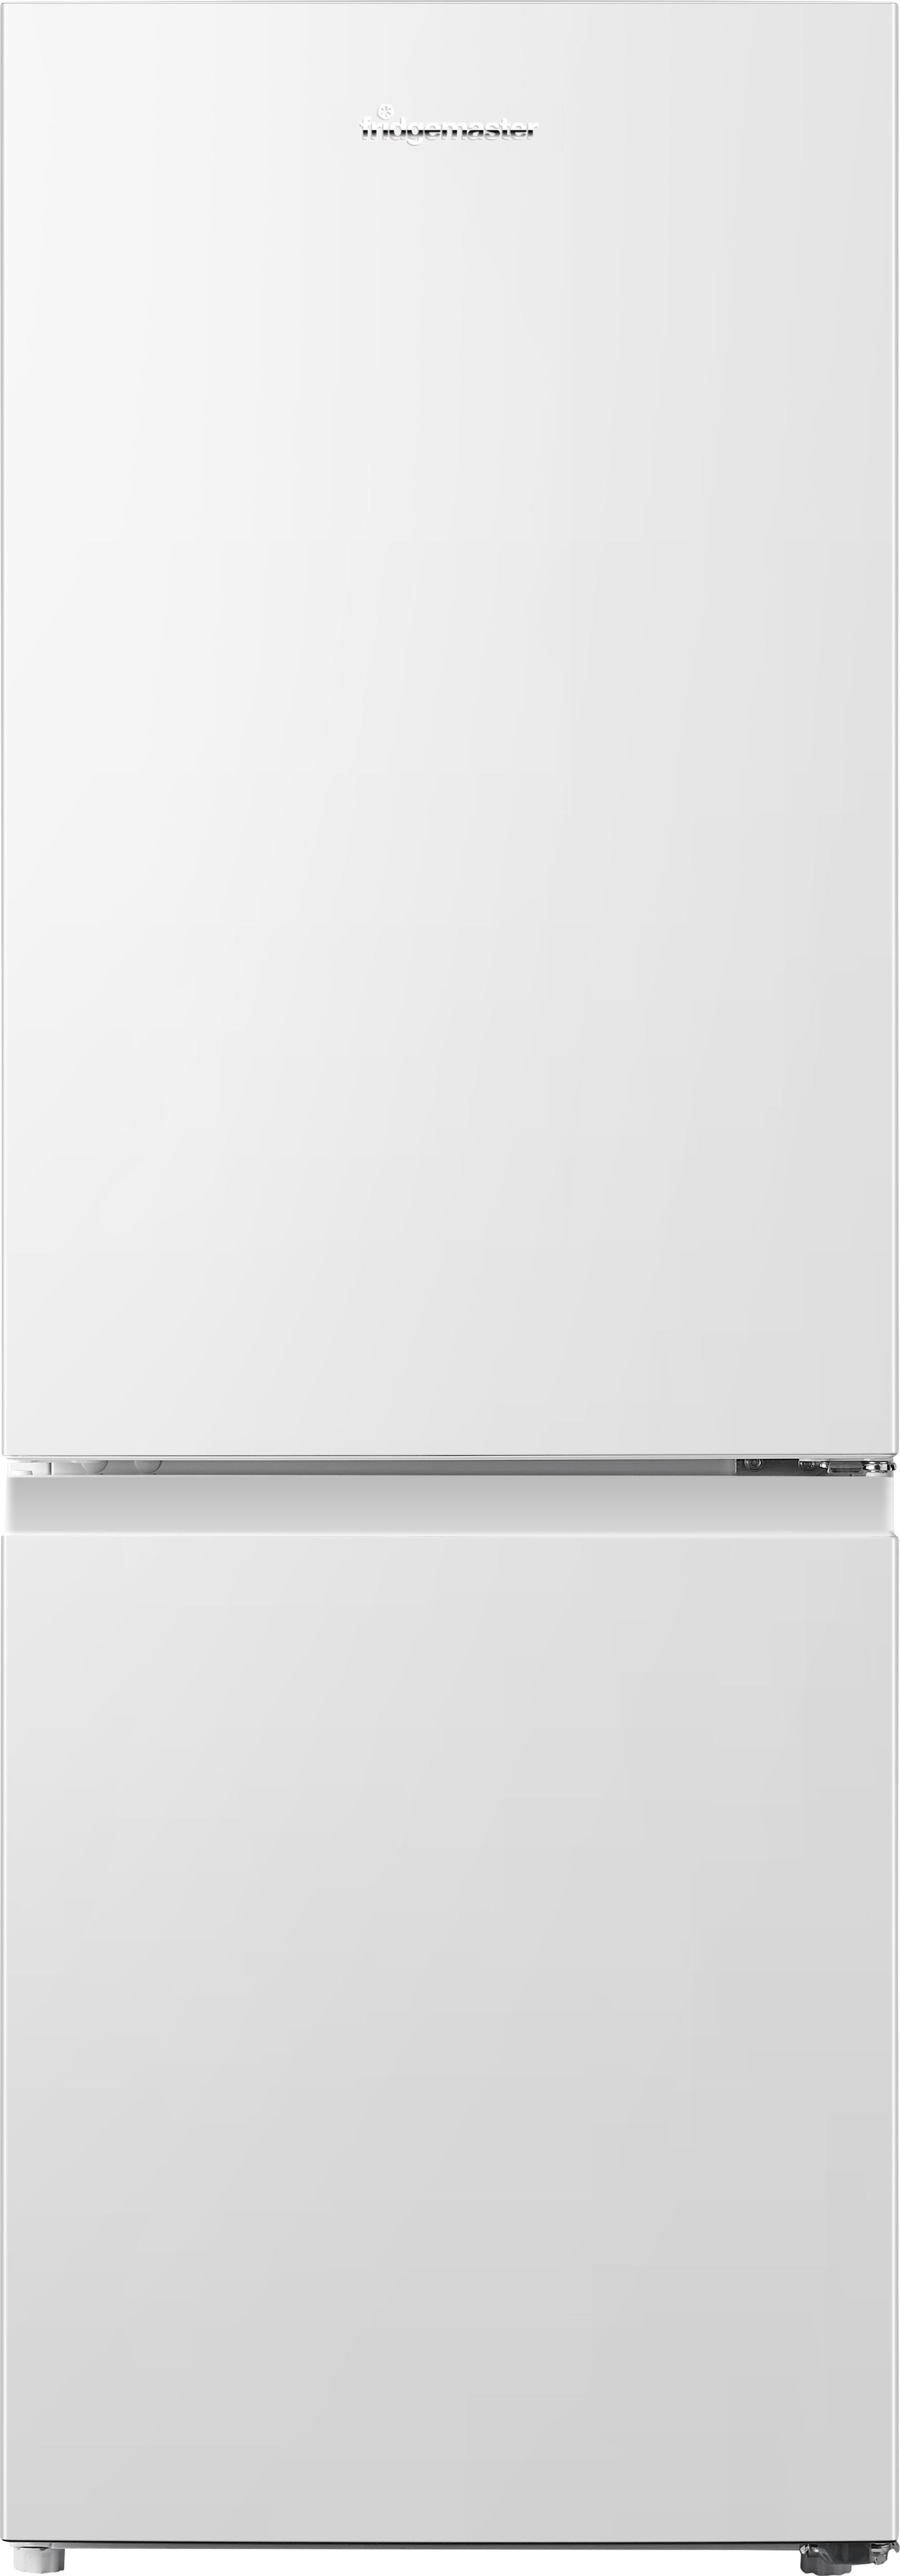 Fridgemaster MC50165E Compact 143cm High 60/40 Fridge Freezer - White - E Rated, White